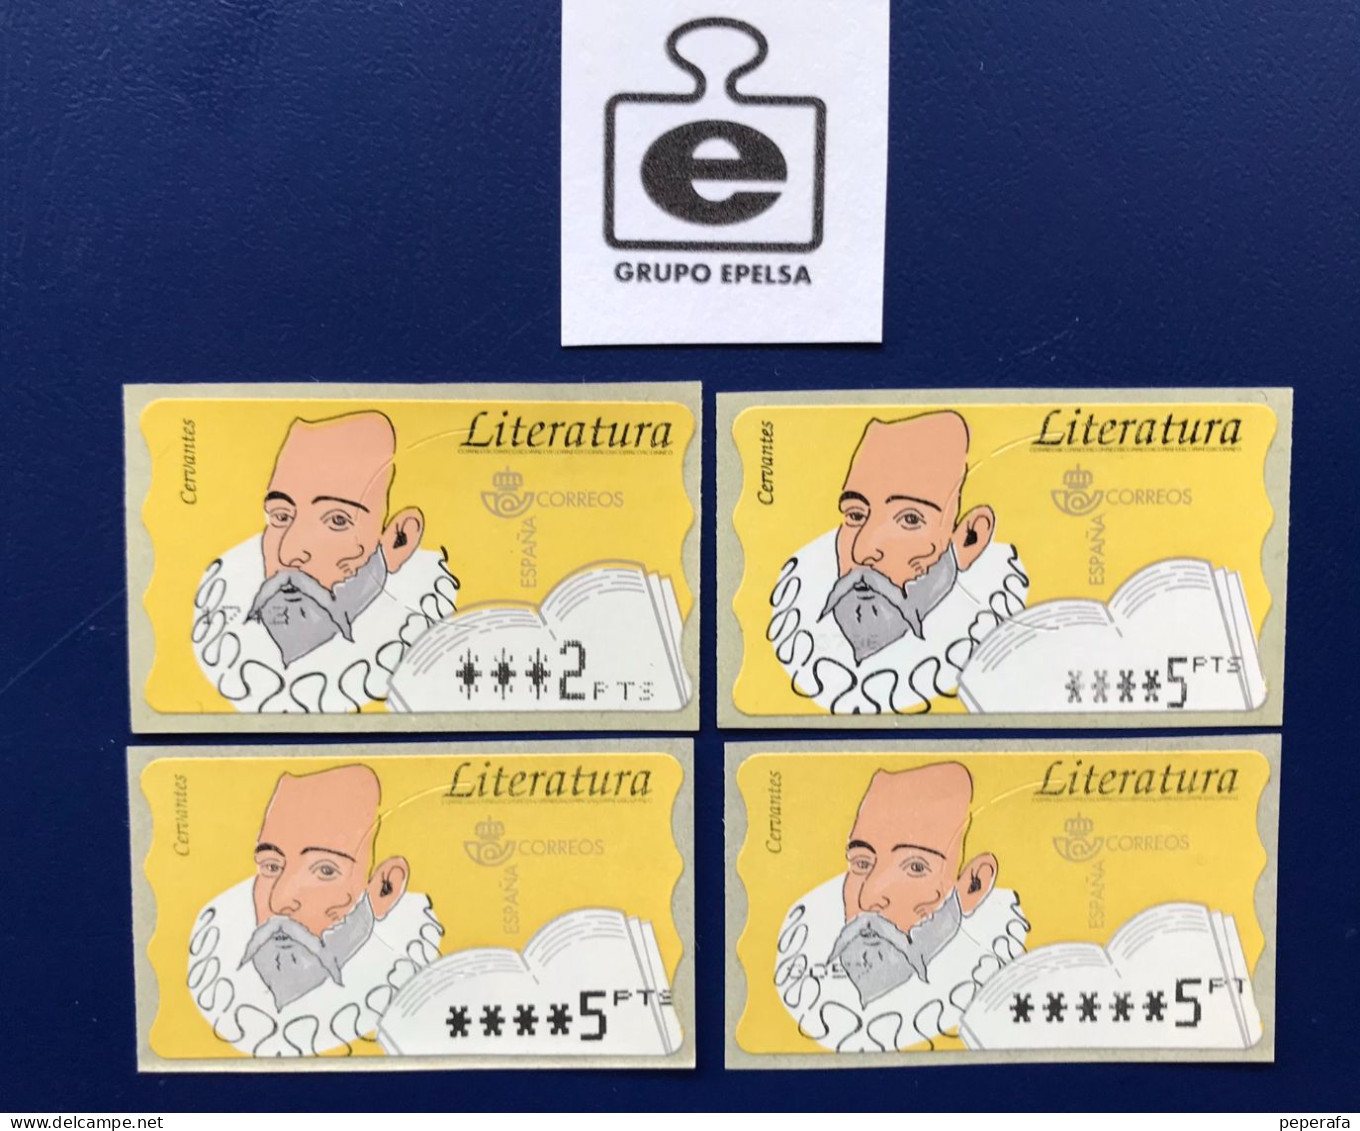 España Spain 1996, LITERATURA CERVANTES, ATM EPELSA, 4 ATM, PAPEL SEMI FOSFORESCENTE, NUEVO PTS - Machine Labels [ATM]